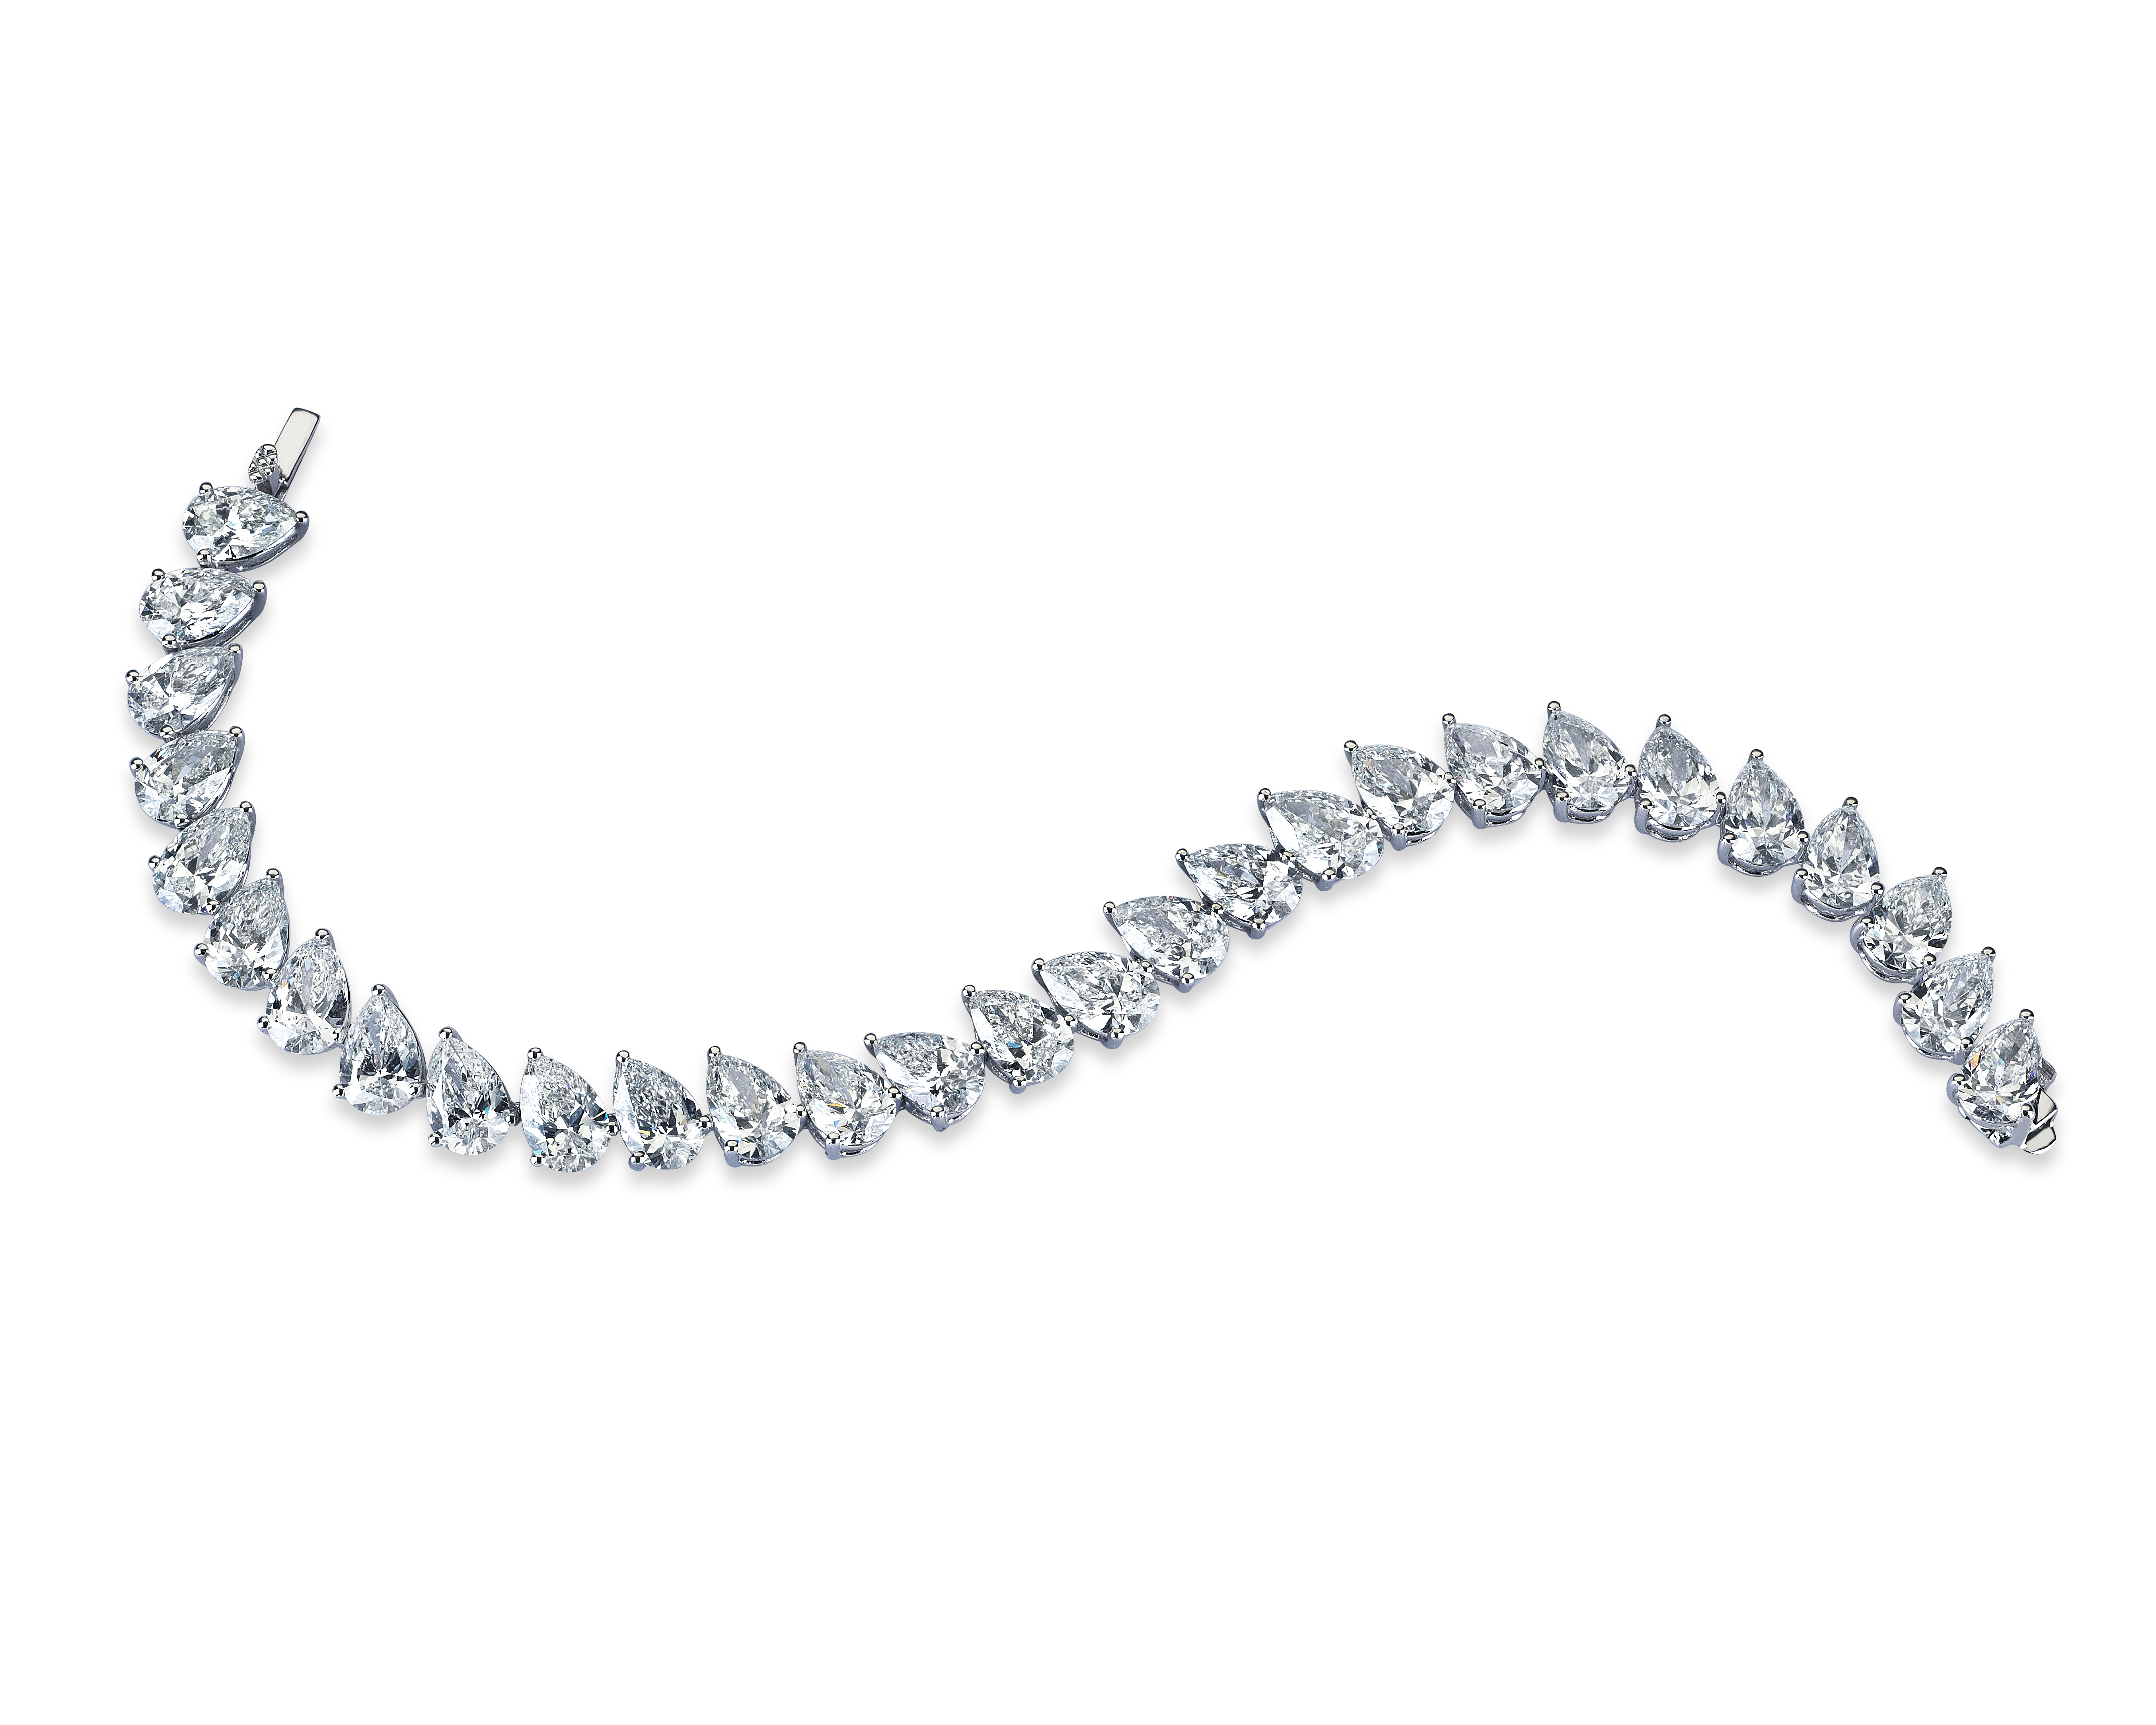 19.98 ct Diamond Bracelet